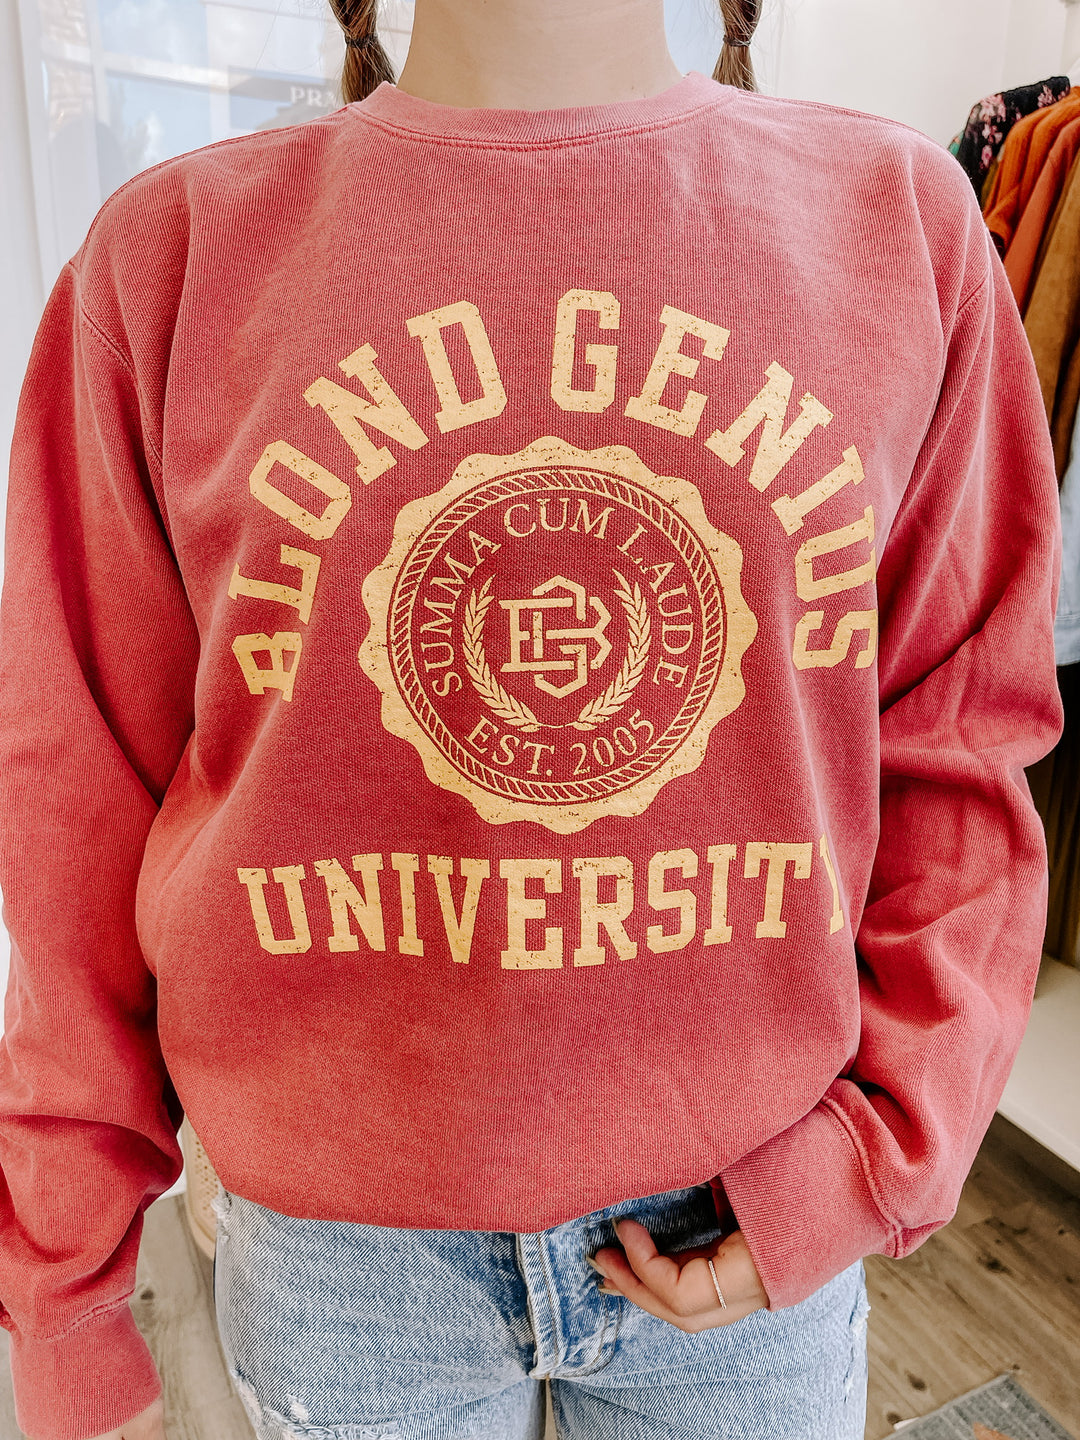 Blond Genius - Blond Genius University in Crimson with Yellow